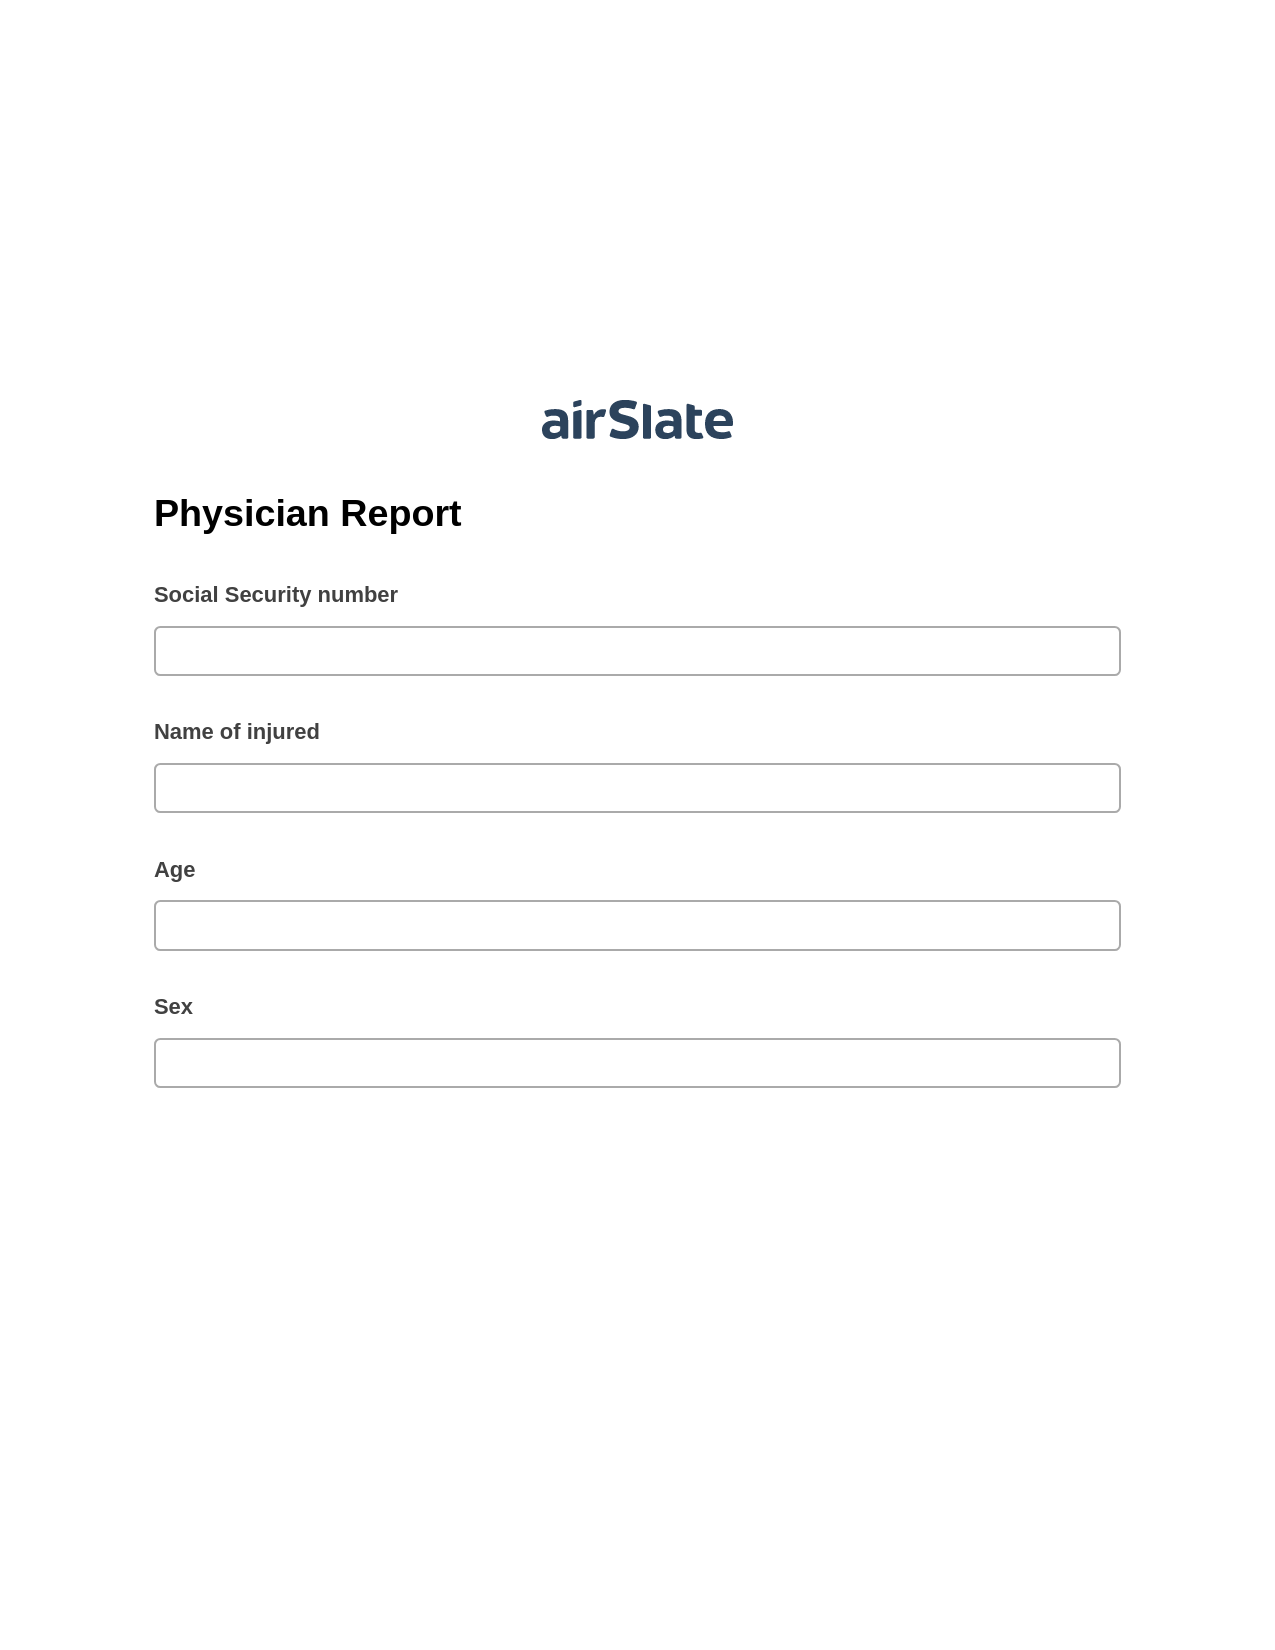 Physician Report Pre-fill Dropdowns from MySQL Bot, Invoke Salesforce Process Bot, Post-finish Document Bot